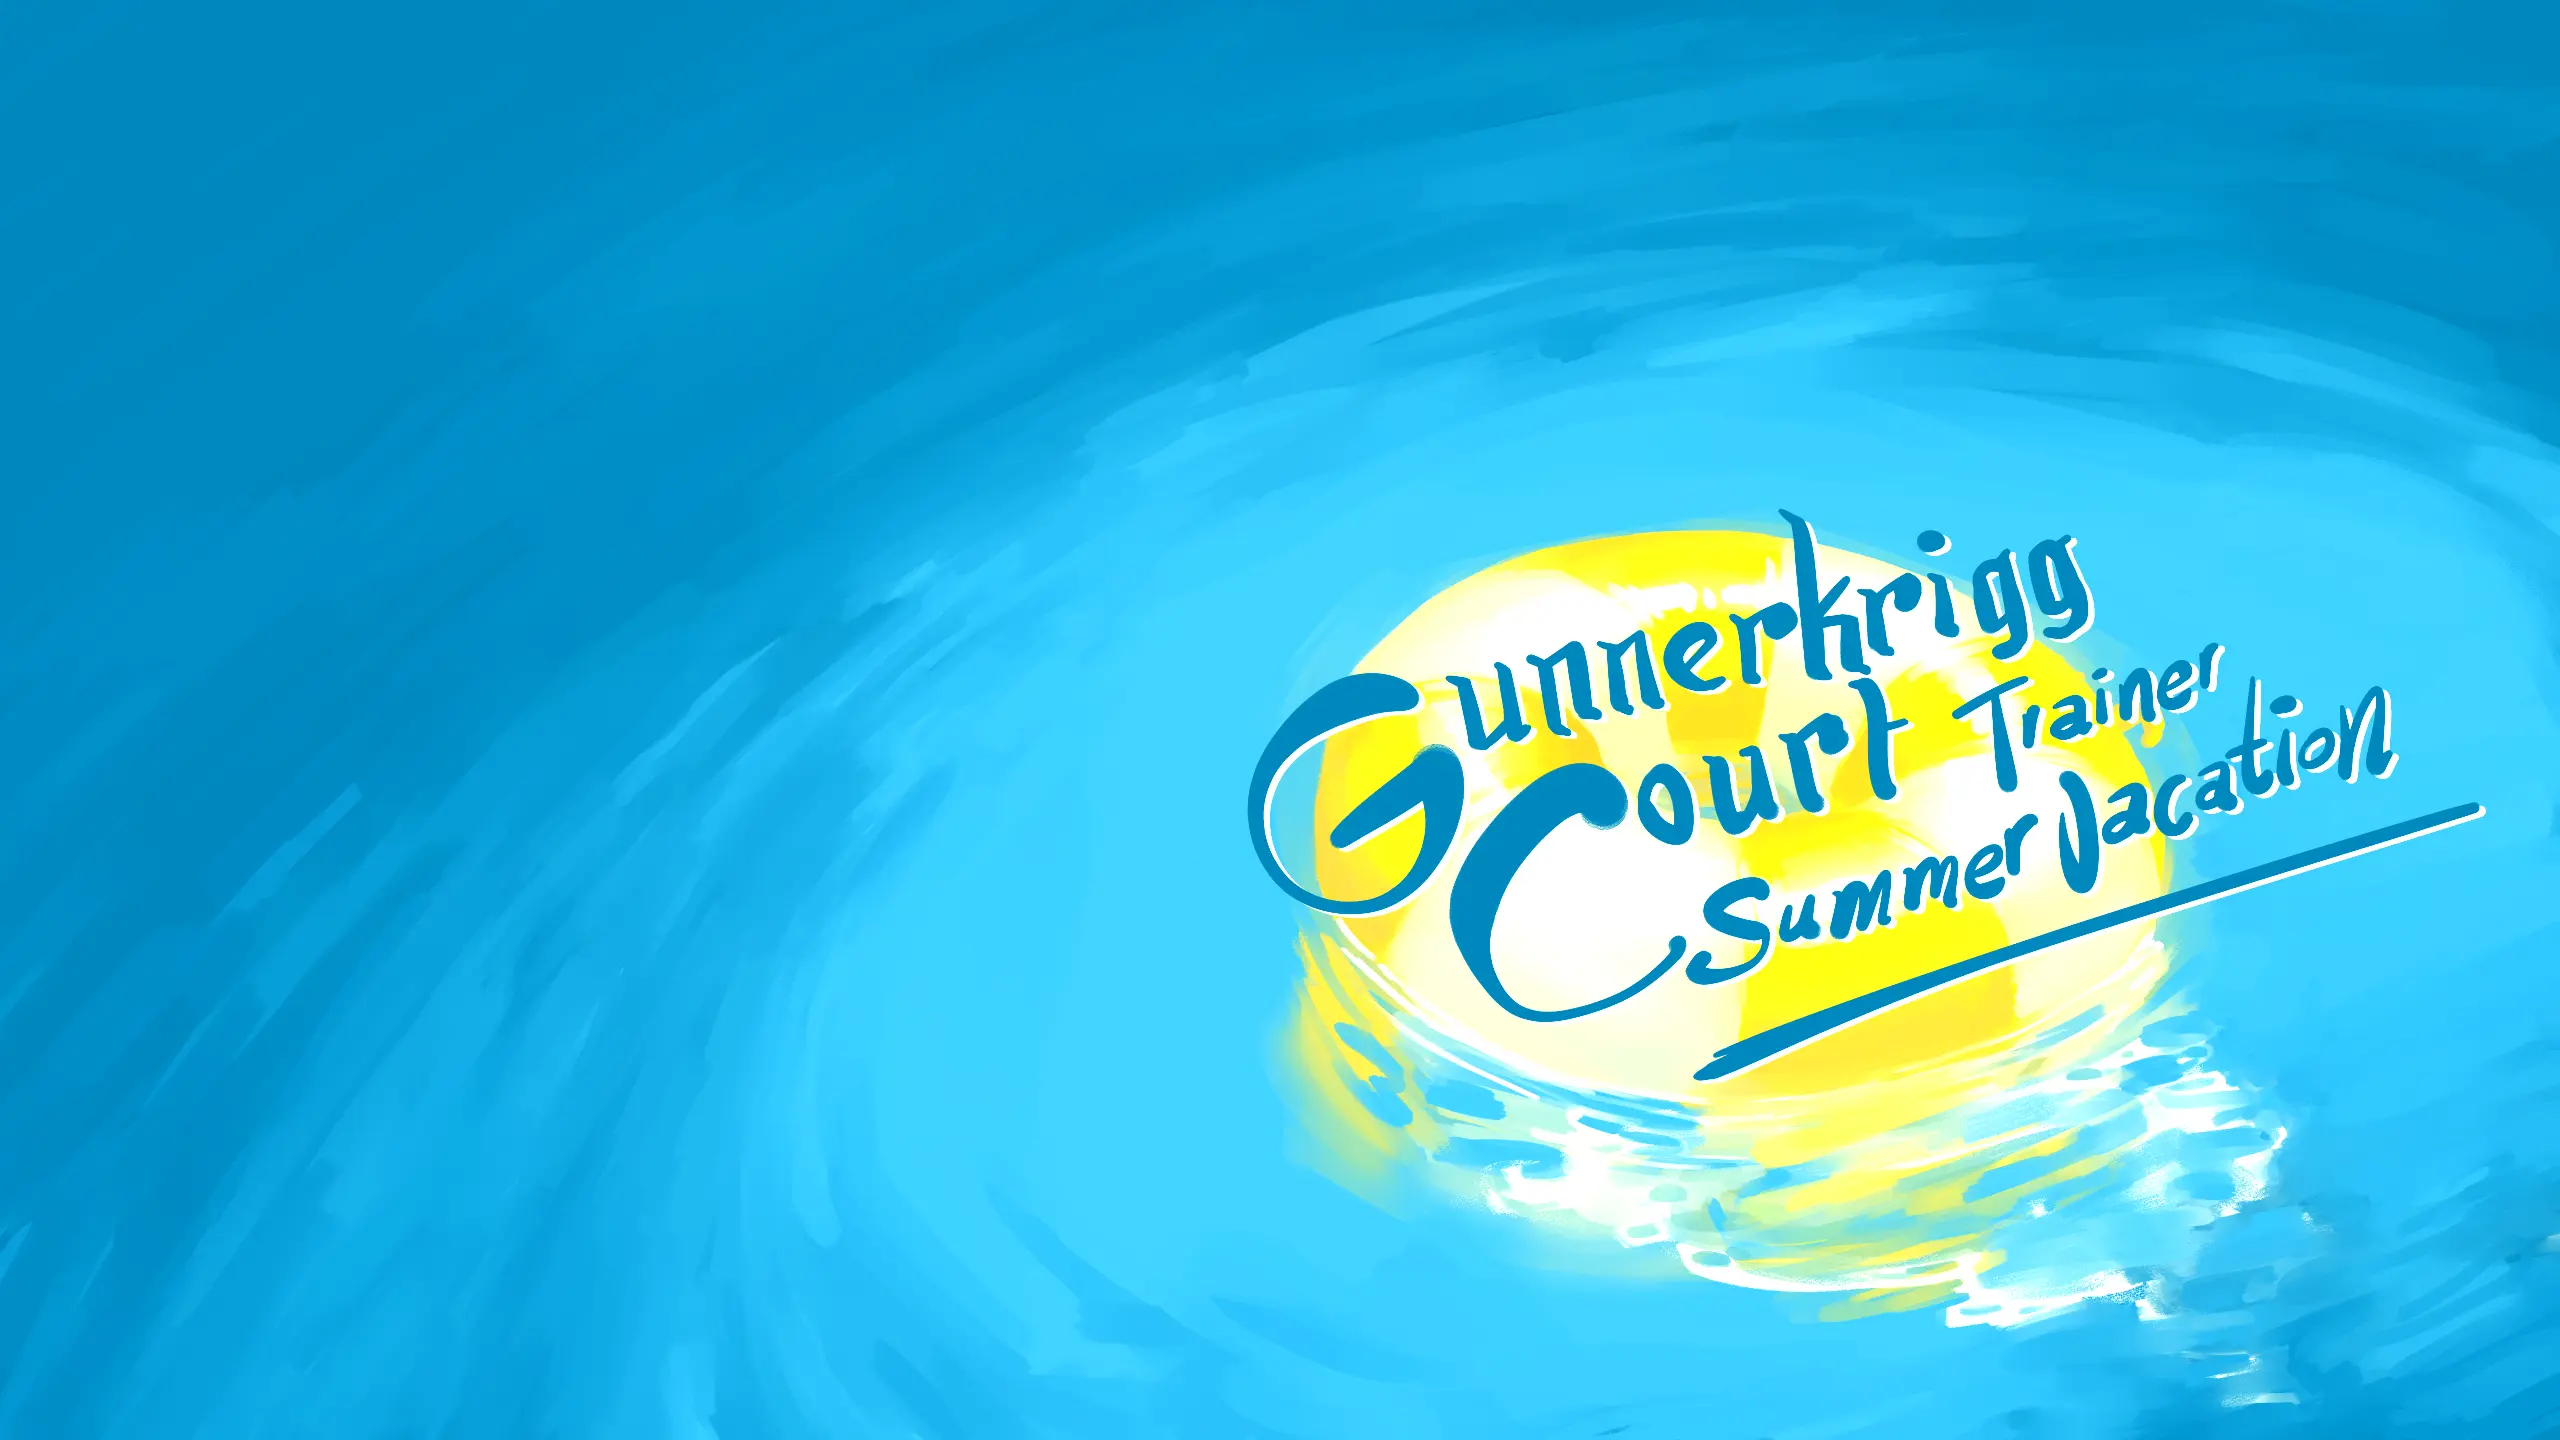 Gunnerkrigg Court Trainer Summer Vacation main image